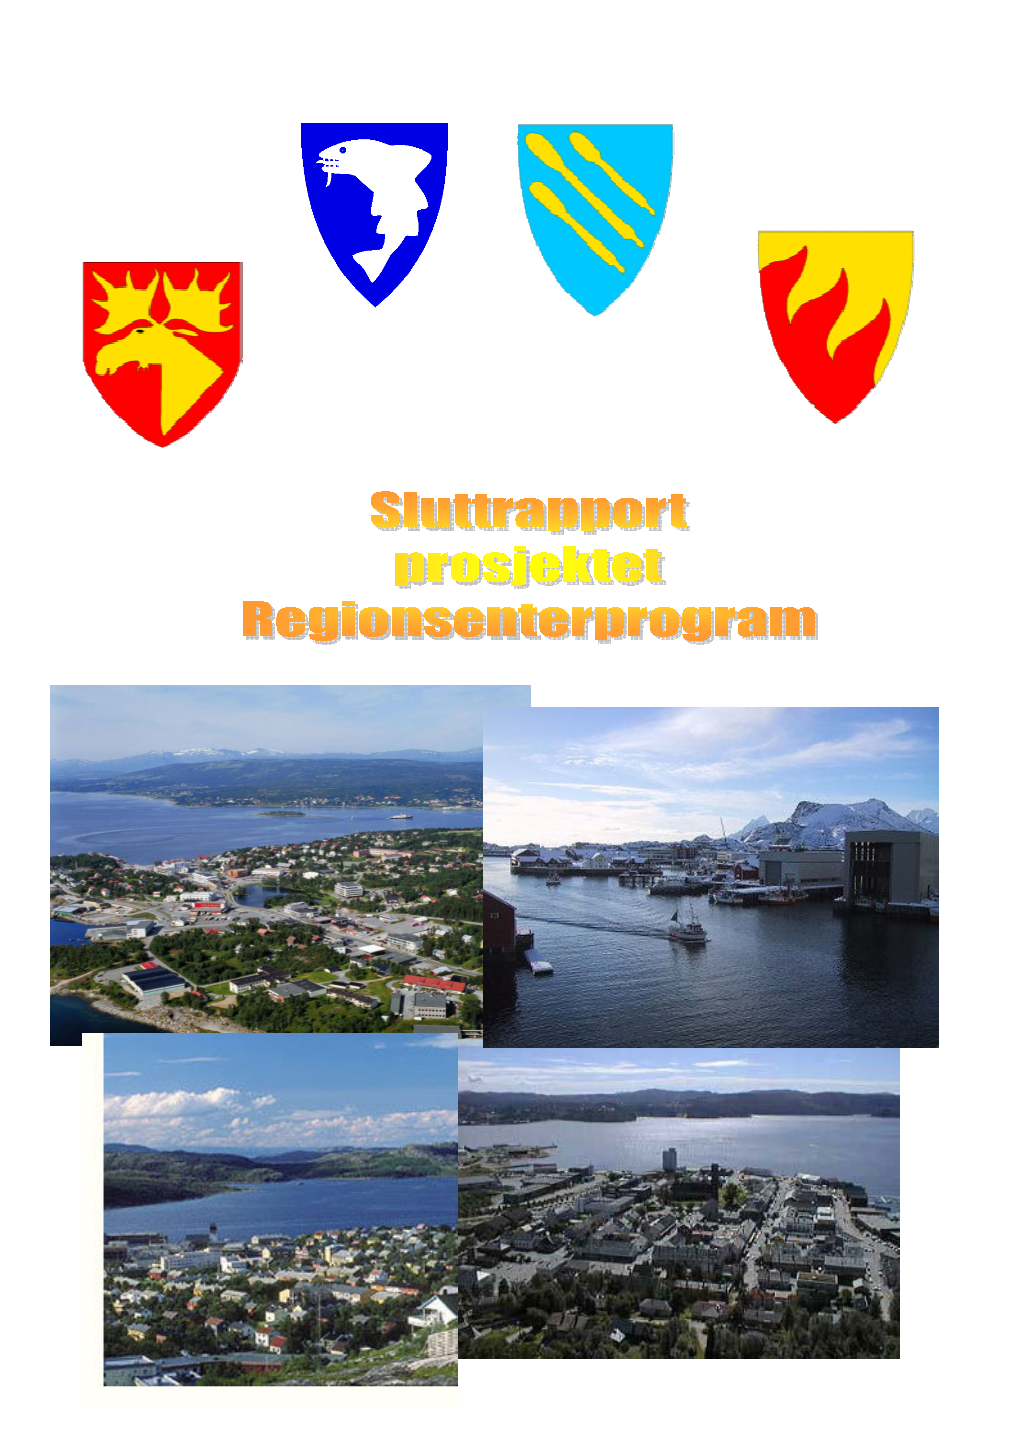 Regionsenterprogram.Pdf